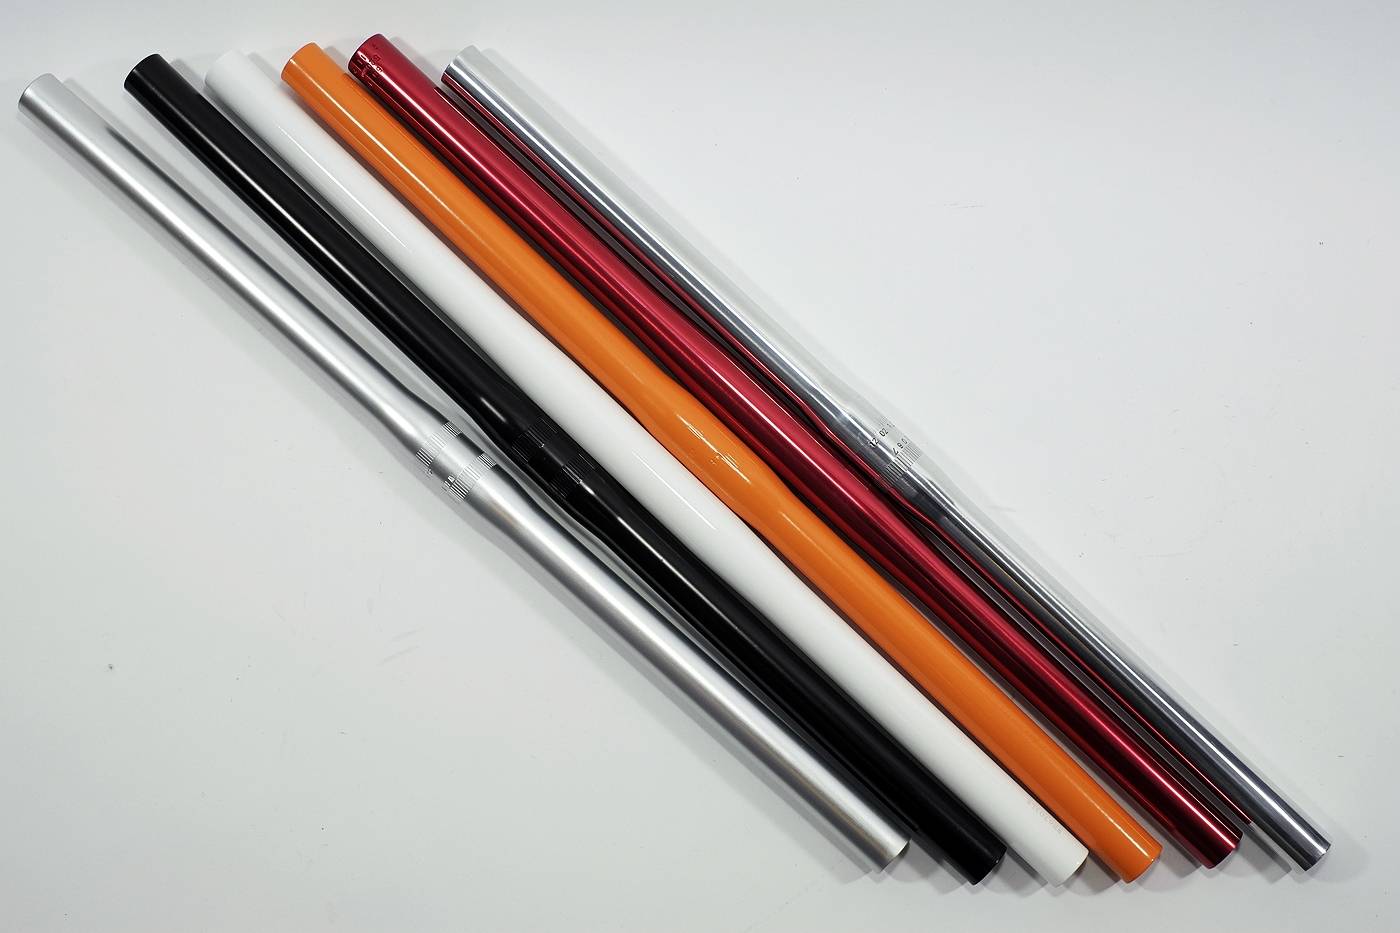 Manubrio Aby.K Flat Bar rosso + nero + argento + arancio + bianco